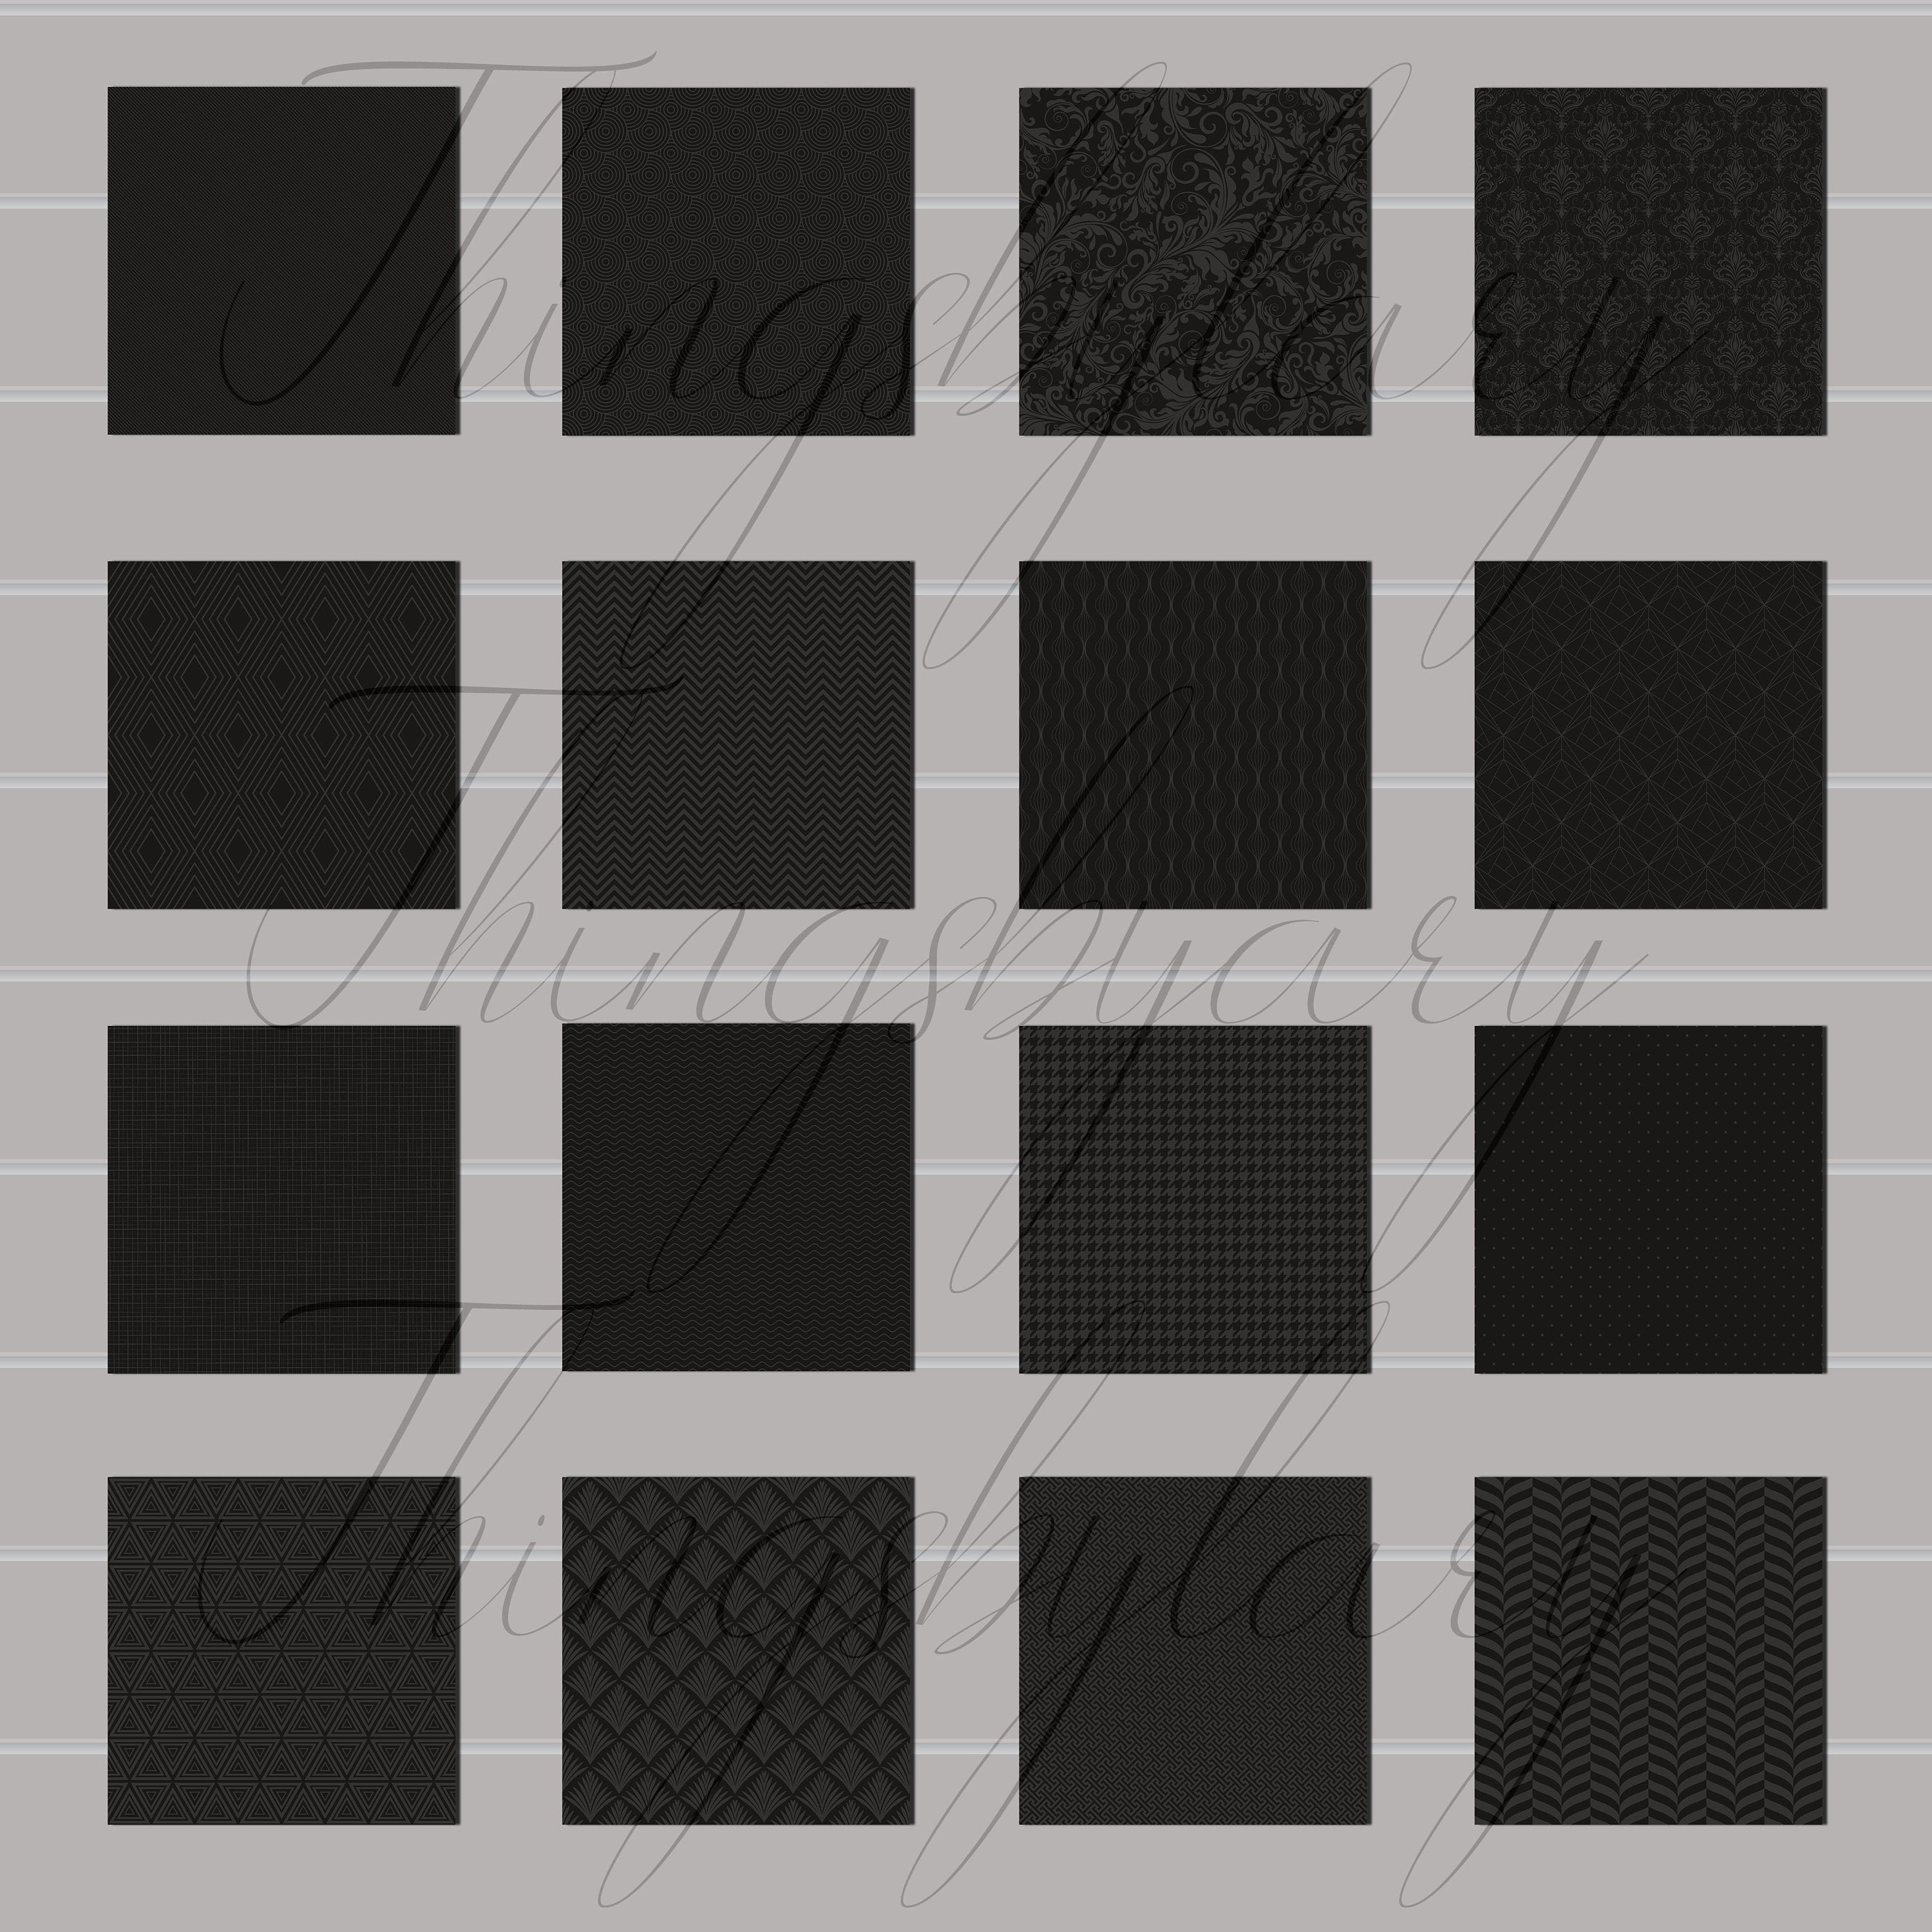 16 Seamless Luxury Black Digital Papers 300 dpi commercial use black gray pattern black damask black geometric art deco black houndstooth